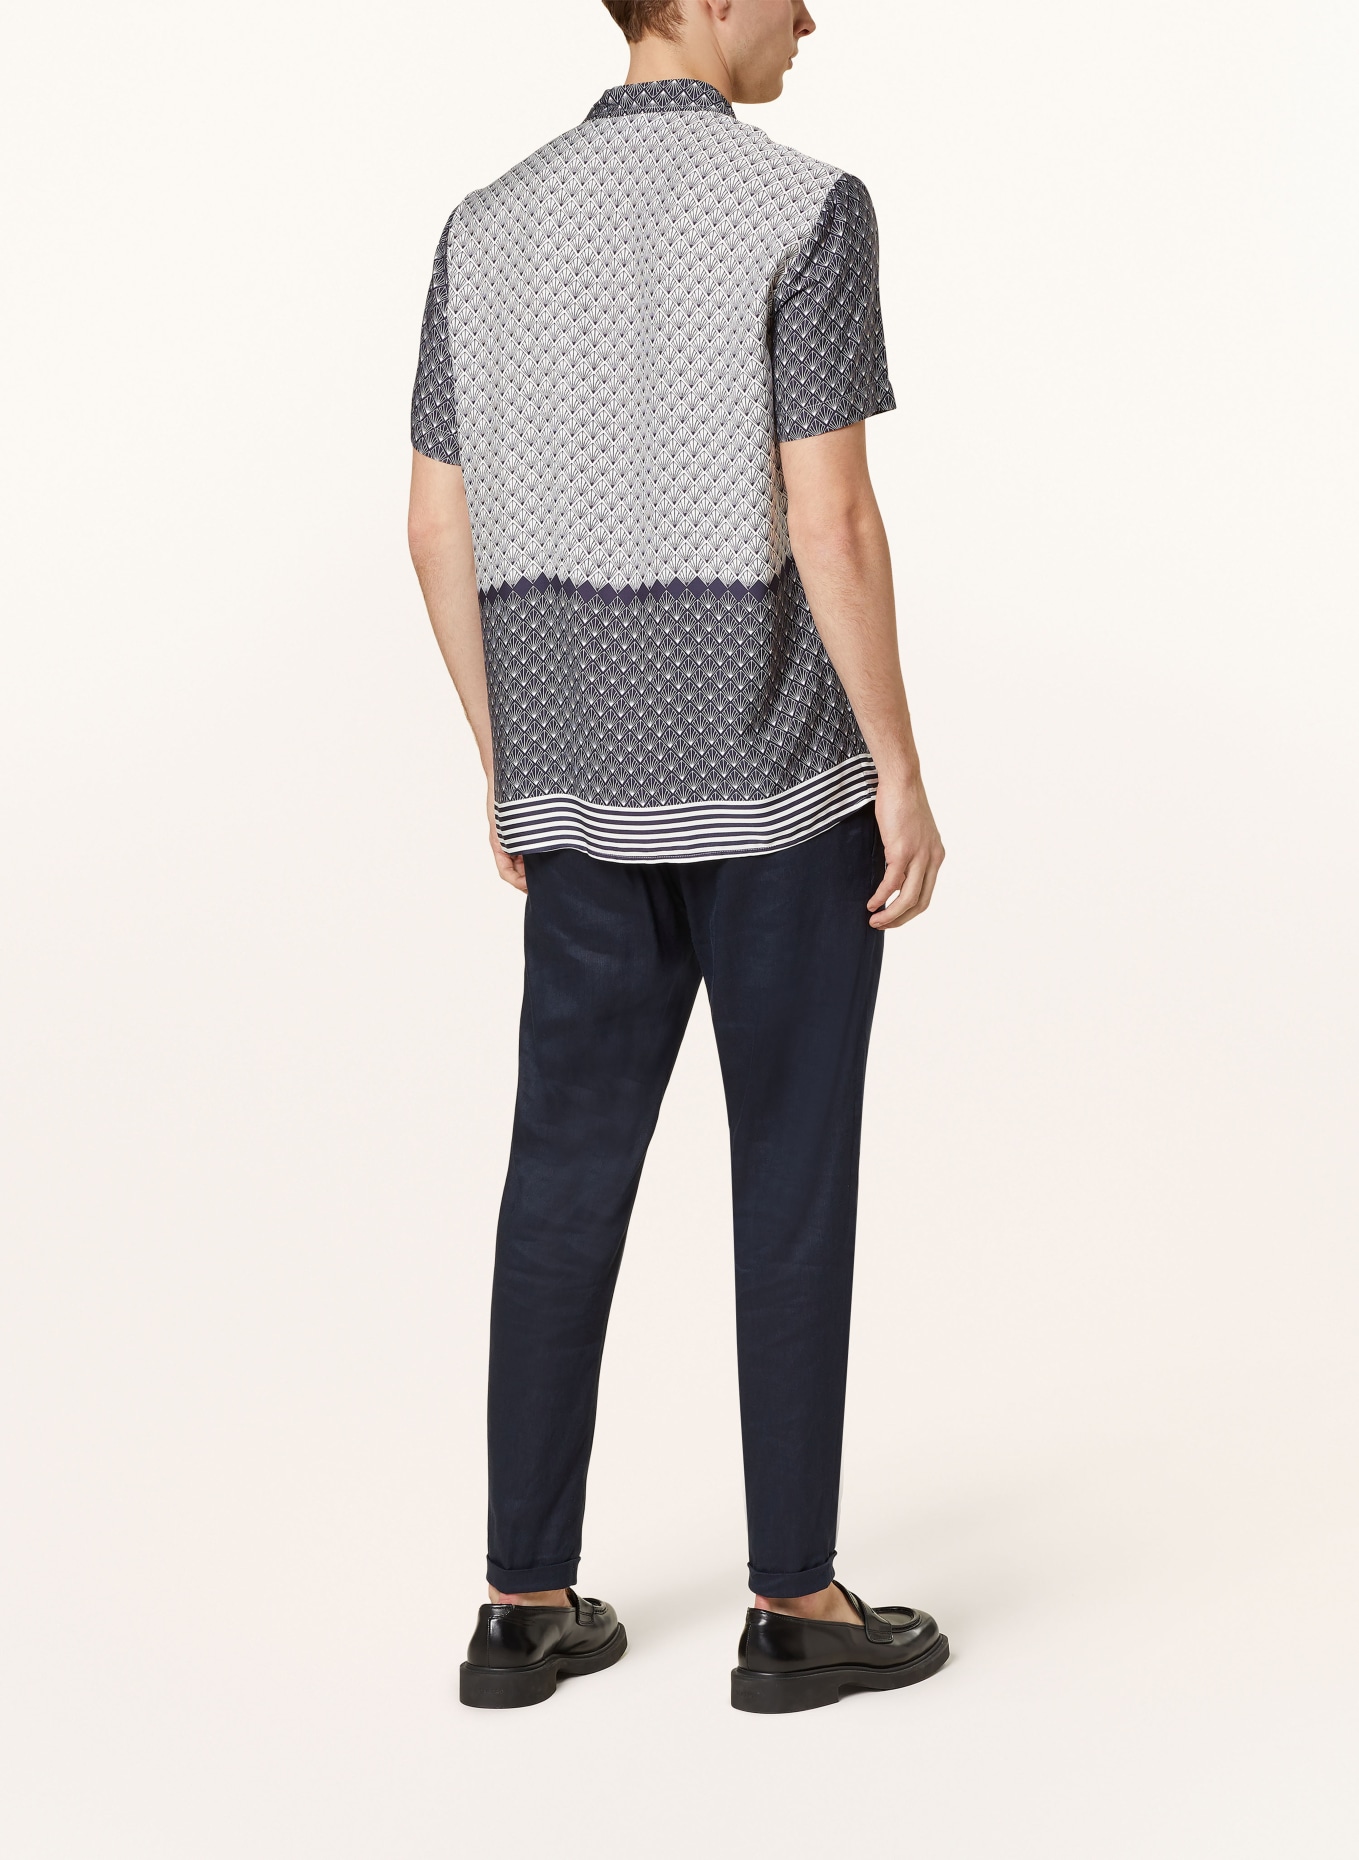 BALDESSARINI Short sleeve shirt regular fit, Color: DARK BLUE/ WHITE (Image 3)